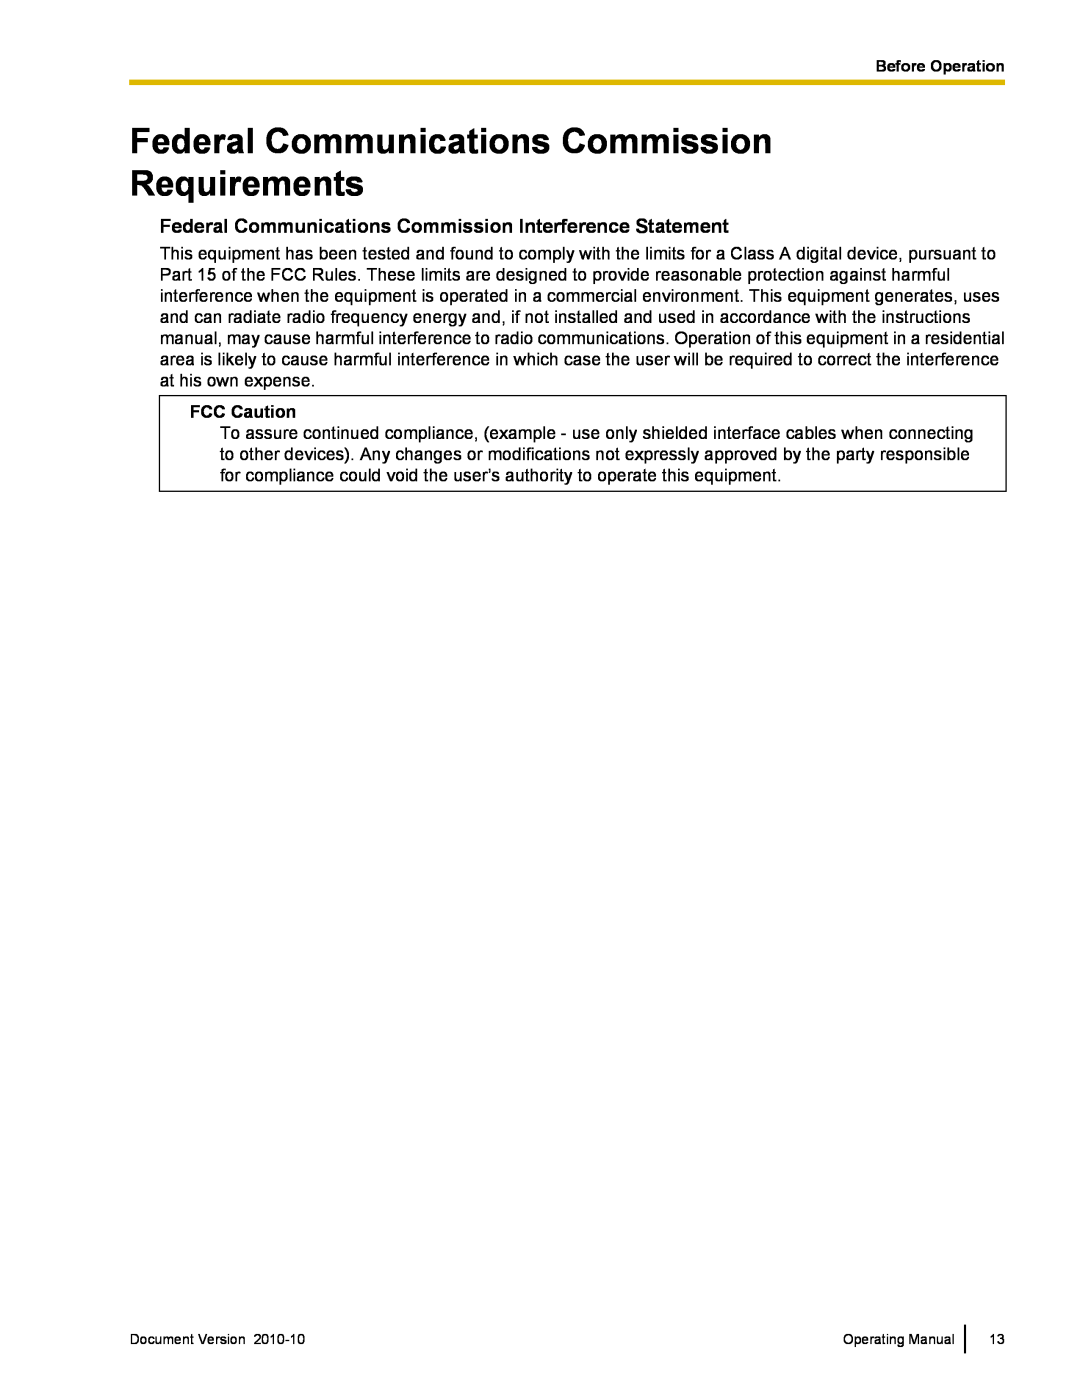 Panasonic KX-VC500 manual Federal Communications Commission Requirements, FCC Caution 